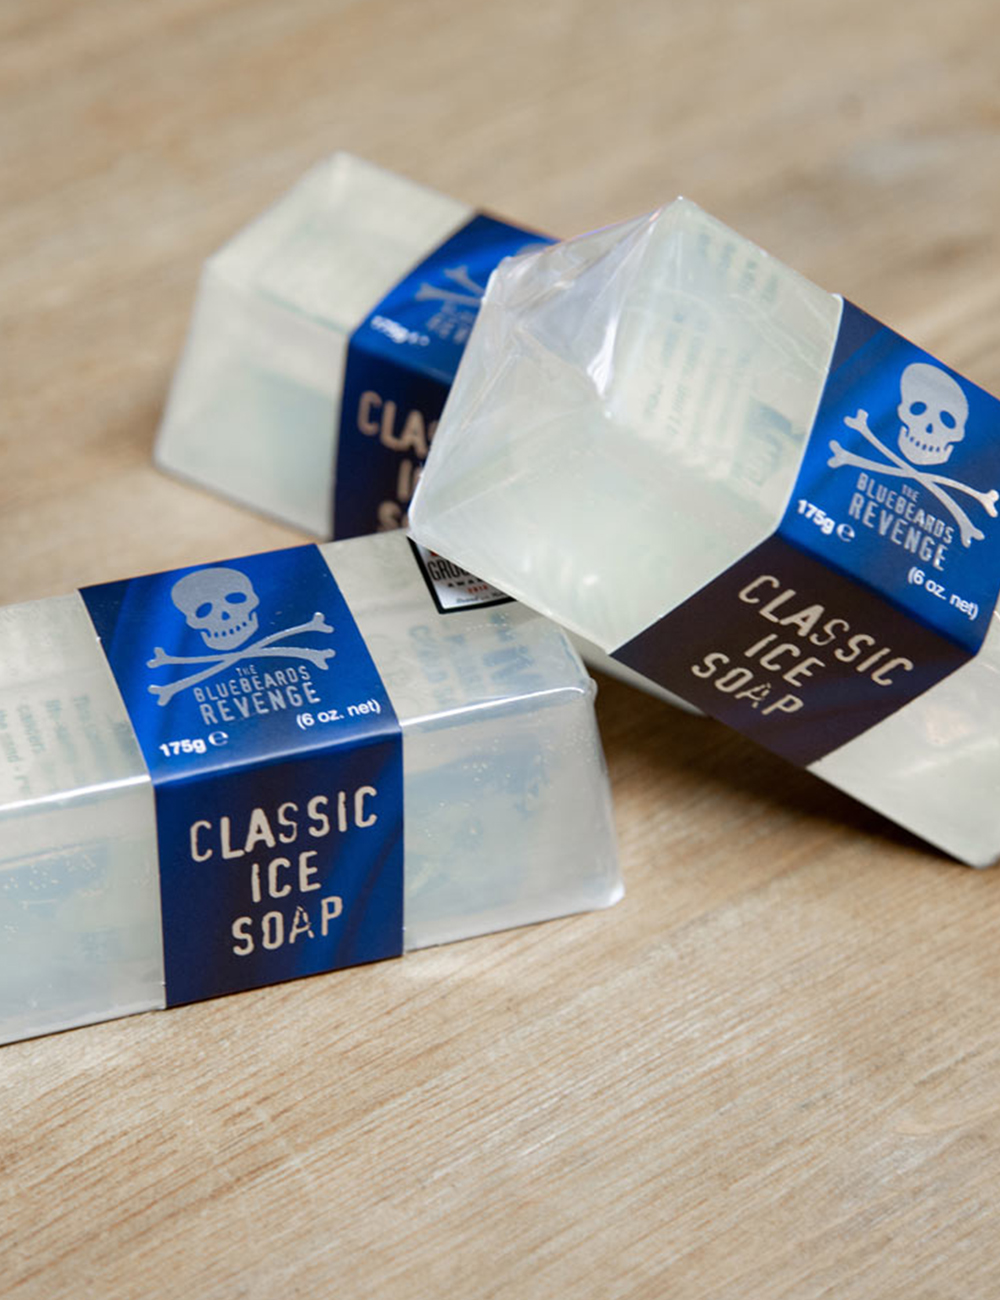 The Bluebeards Revenge Classic Ice Soap Bar 1